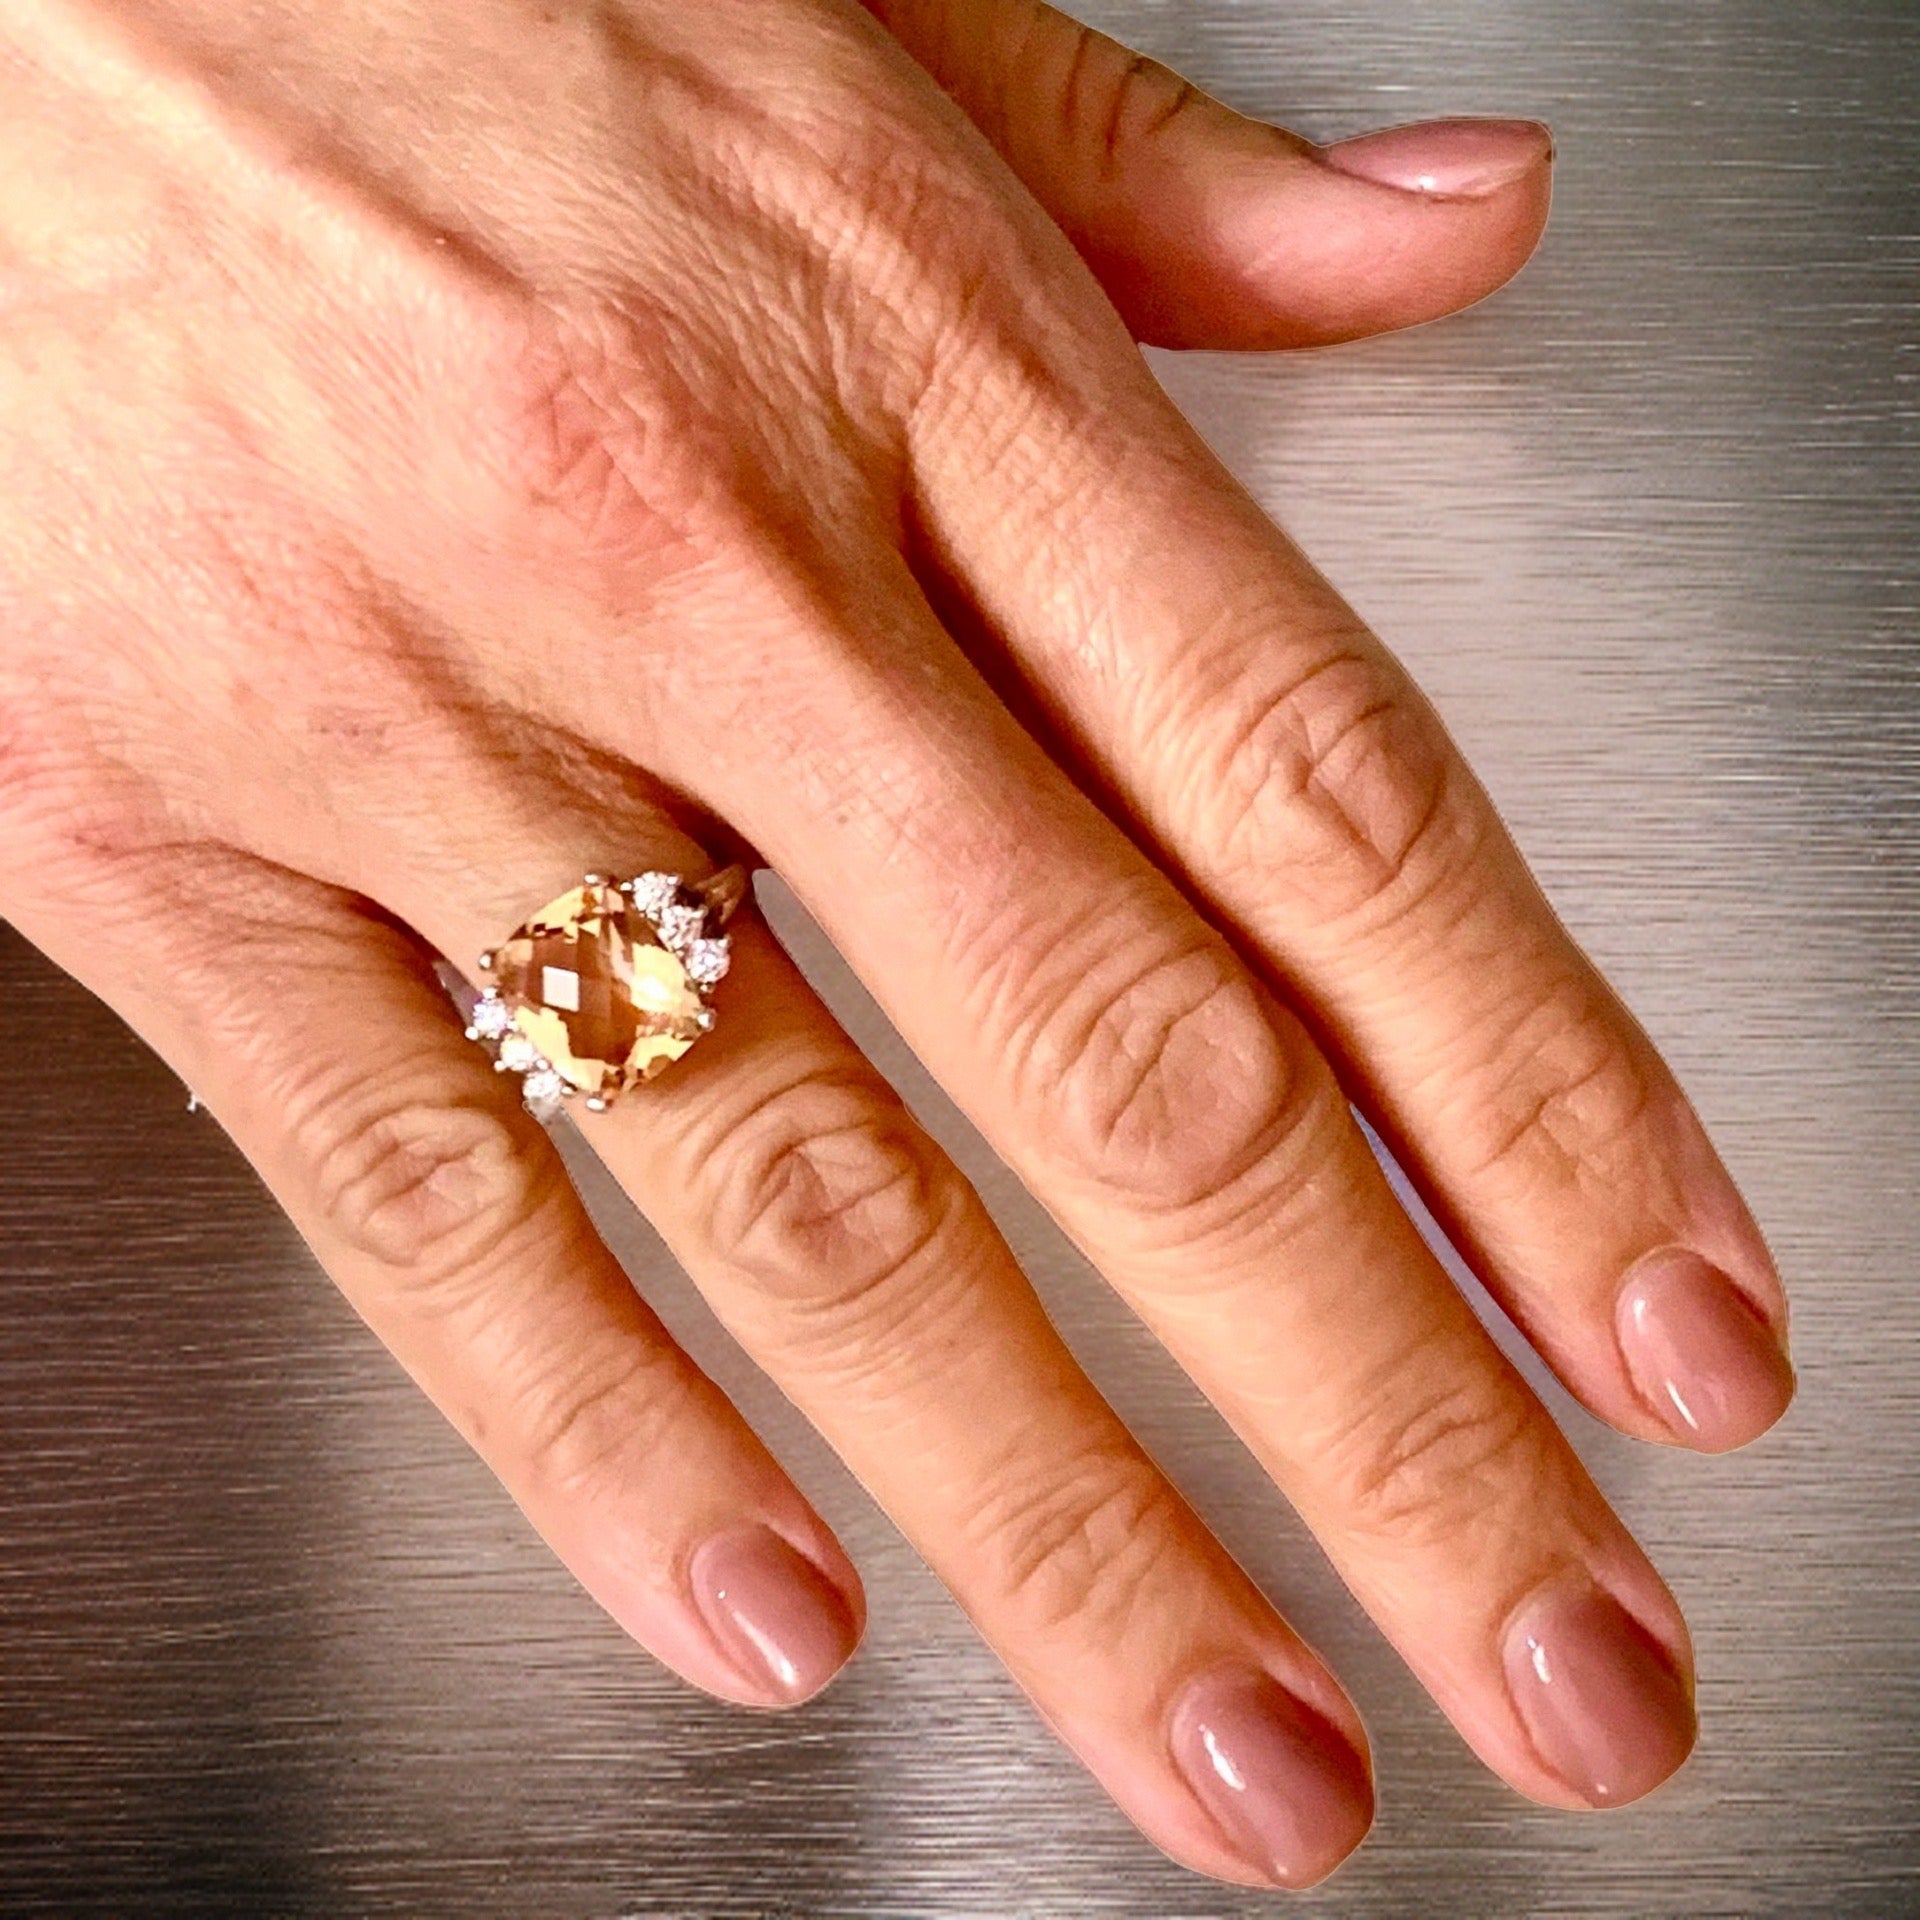 Diamond Morganite Ring Size 7.25 14k Gold 5.60 TCW Certified $5,950 120600 - Certified Fine Jewelry